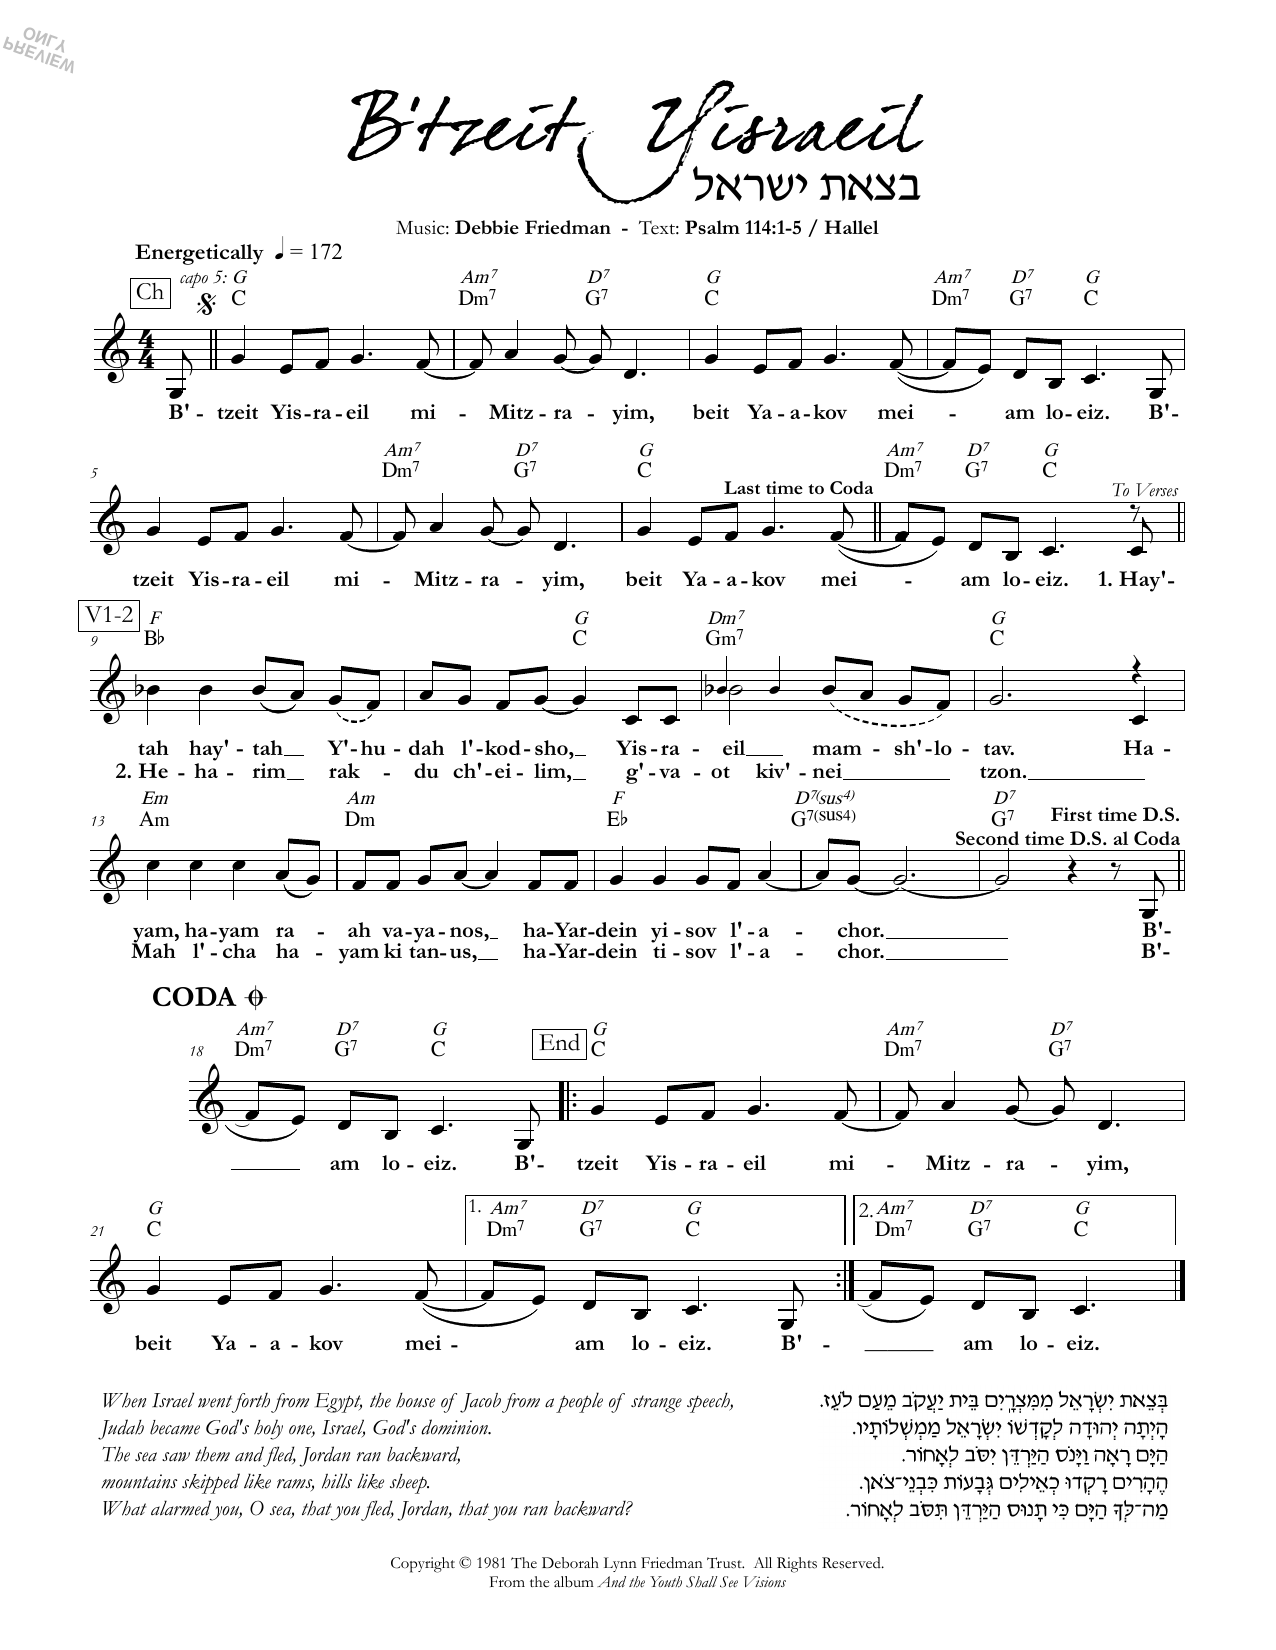 Debbie Friedman B'tzeit Yisraeil Sheet Music Notes & Chords for Lead Sheet / Fake Book - Download or Print PDF